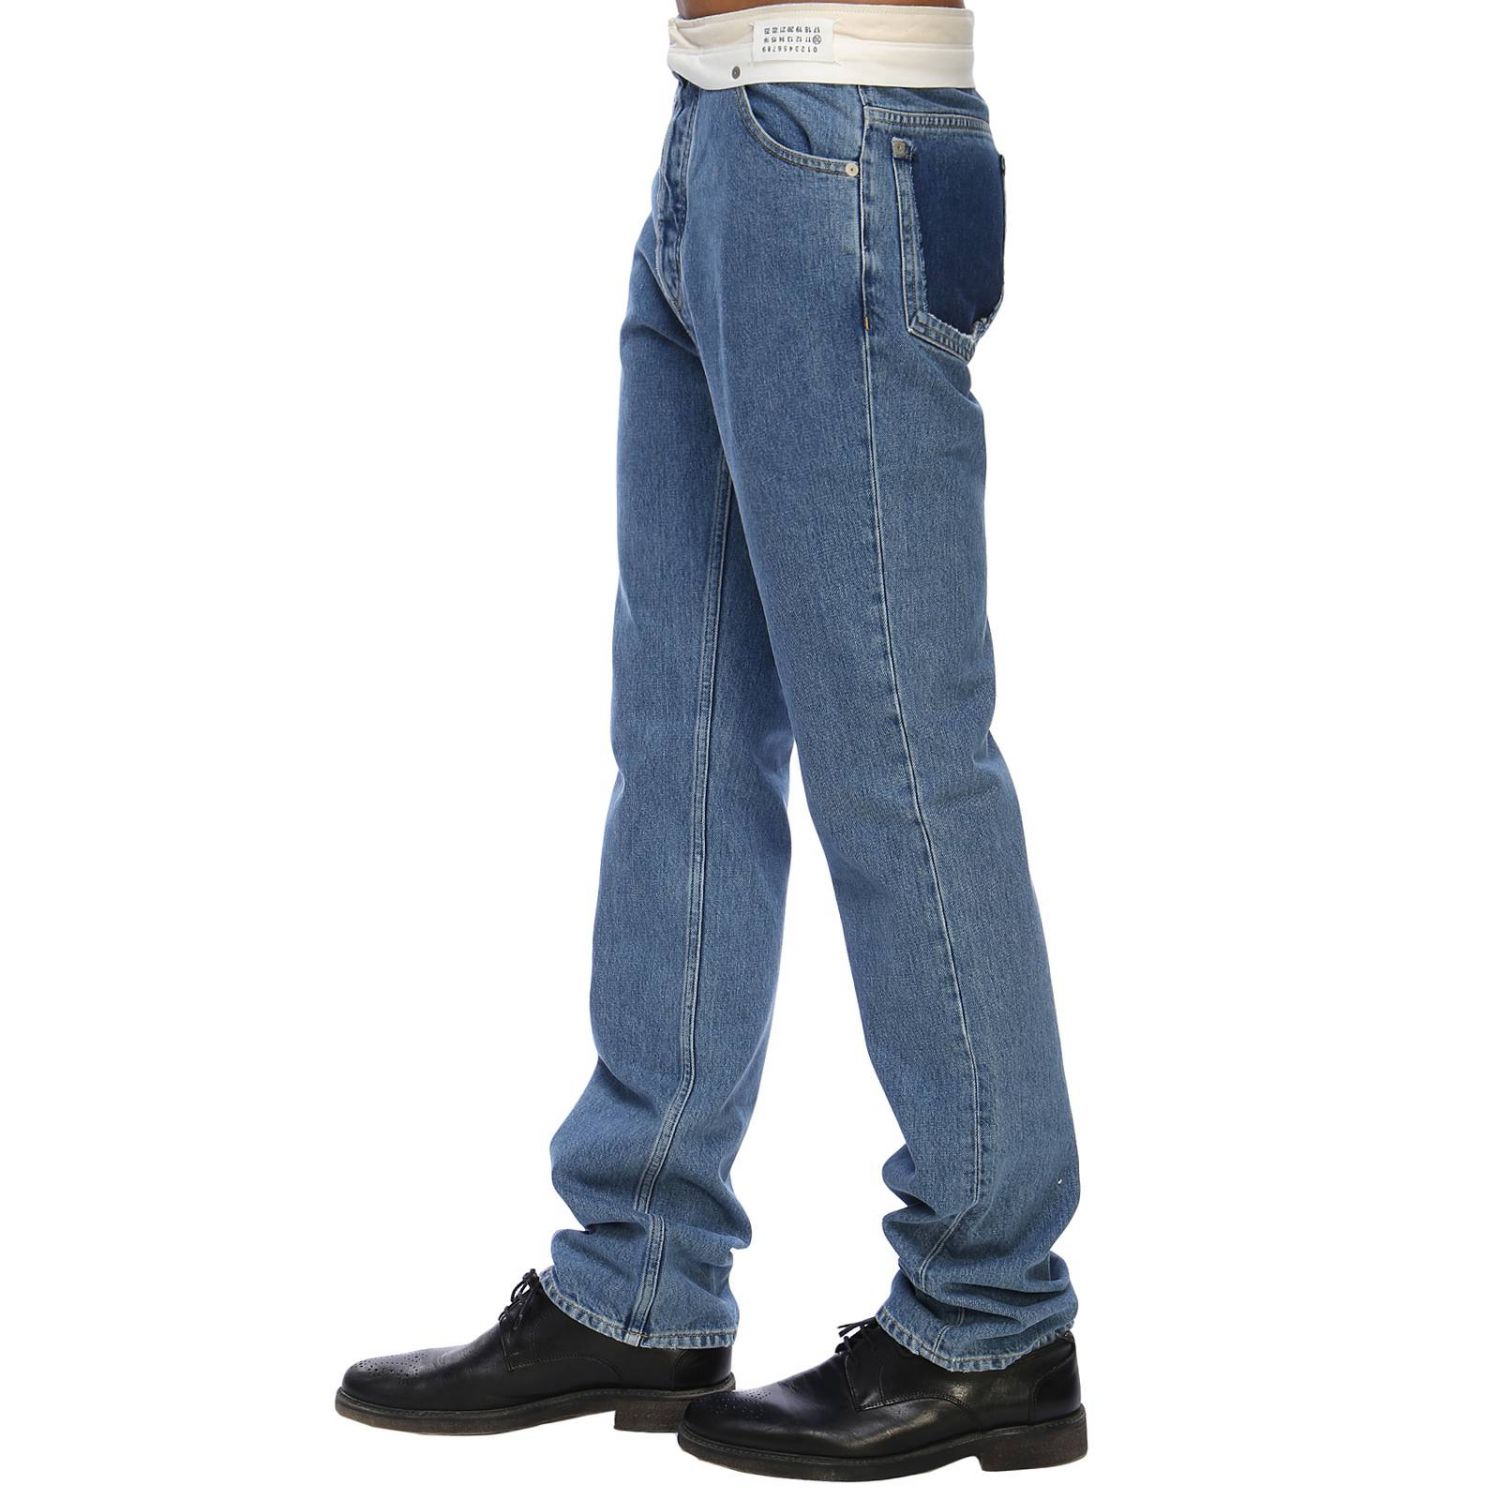 margiela jeans mens